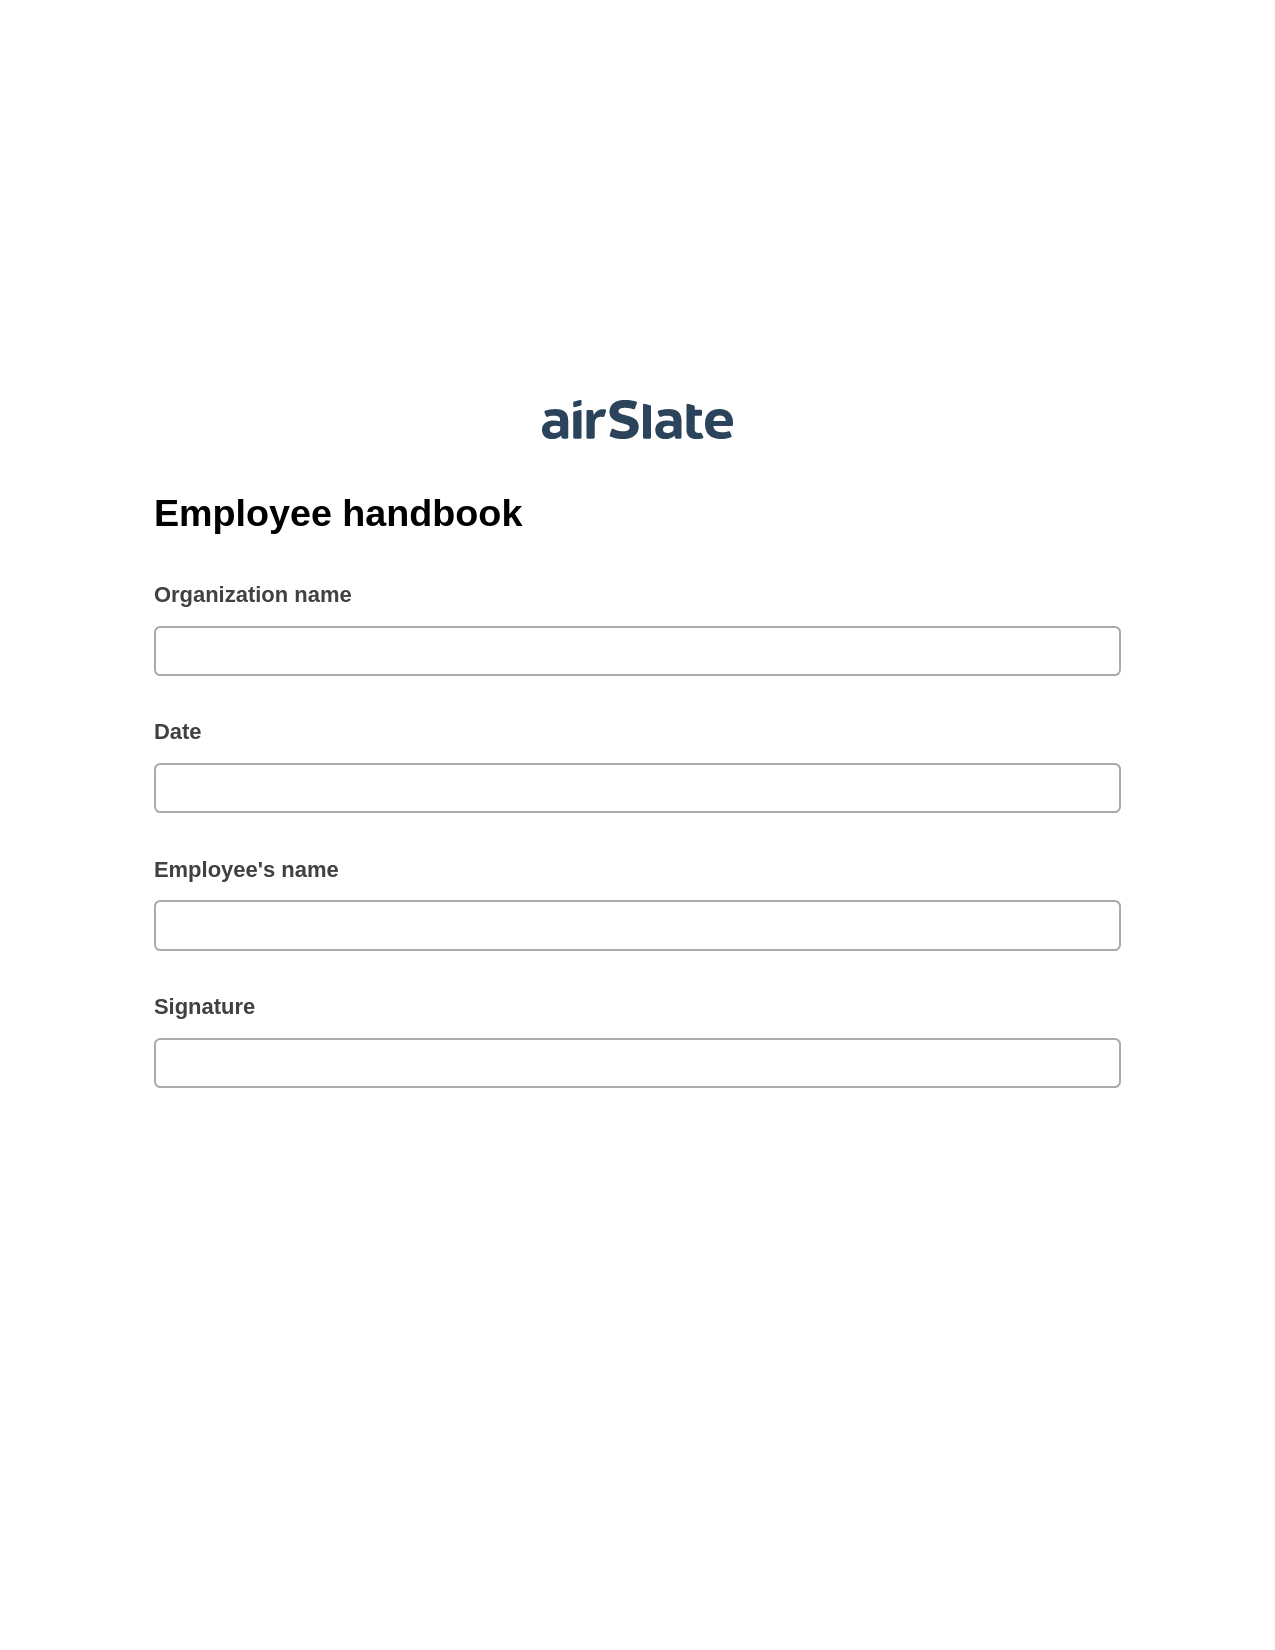 Employee handbook Pre-fill Document Bot, Add Tags to Slate Bot, Post-finish Document Bot